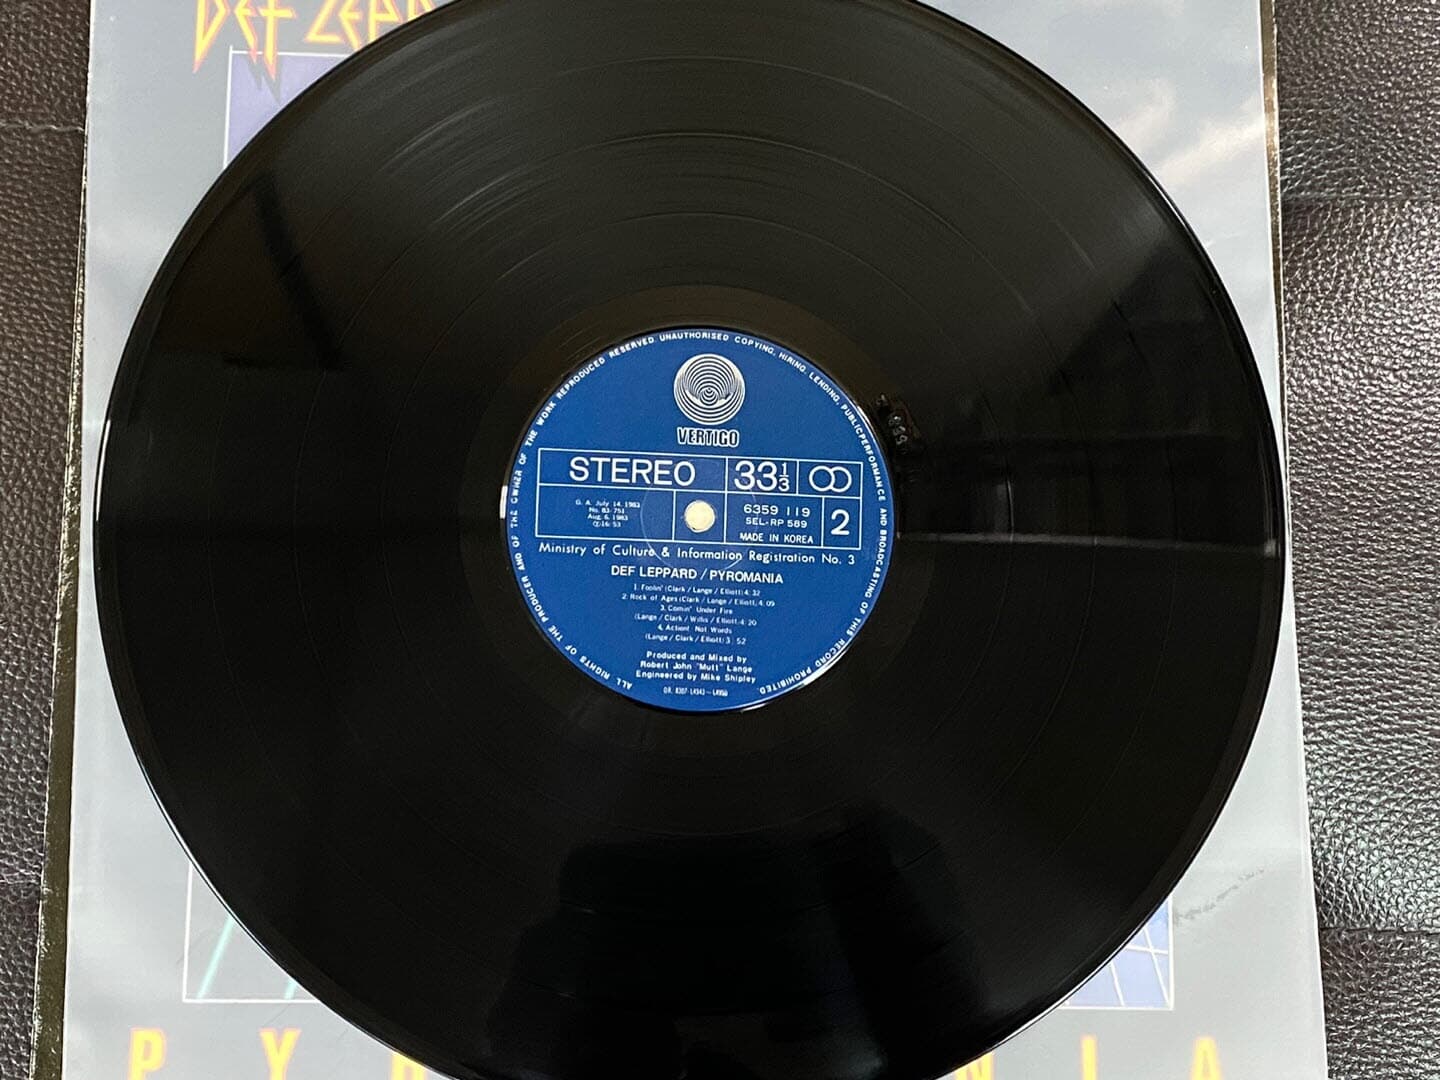 [LP] 데프 레퍼드 - Def Leppard - Pyromania LP [성음-라이센스반]